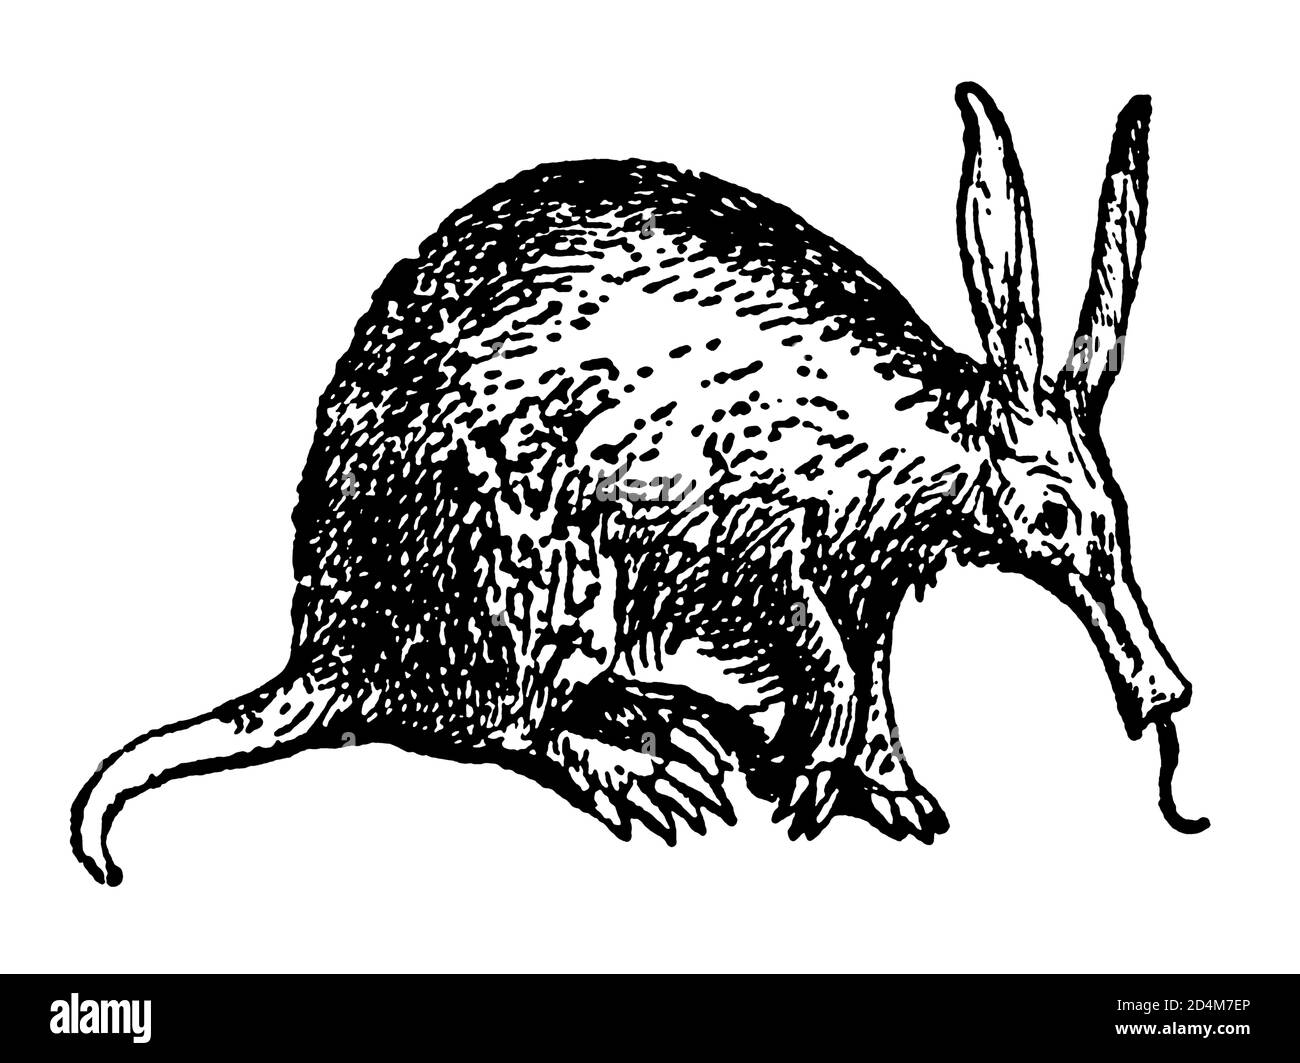 Vintage engraving of an antbear (isolated on white). Published in Systematischer Bilder-Atlas zum Conversations-Lexikon, Ikonographische Encyklopaedie Stock Photo